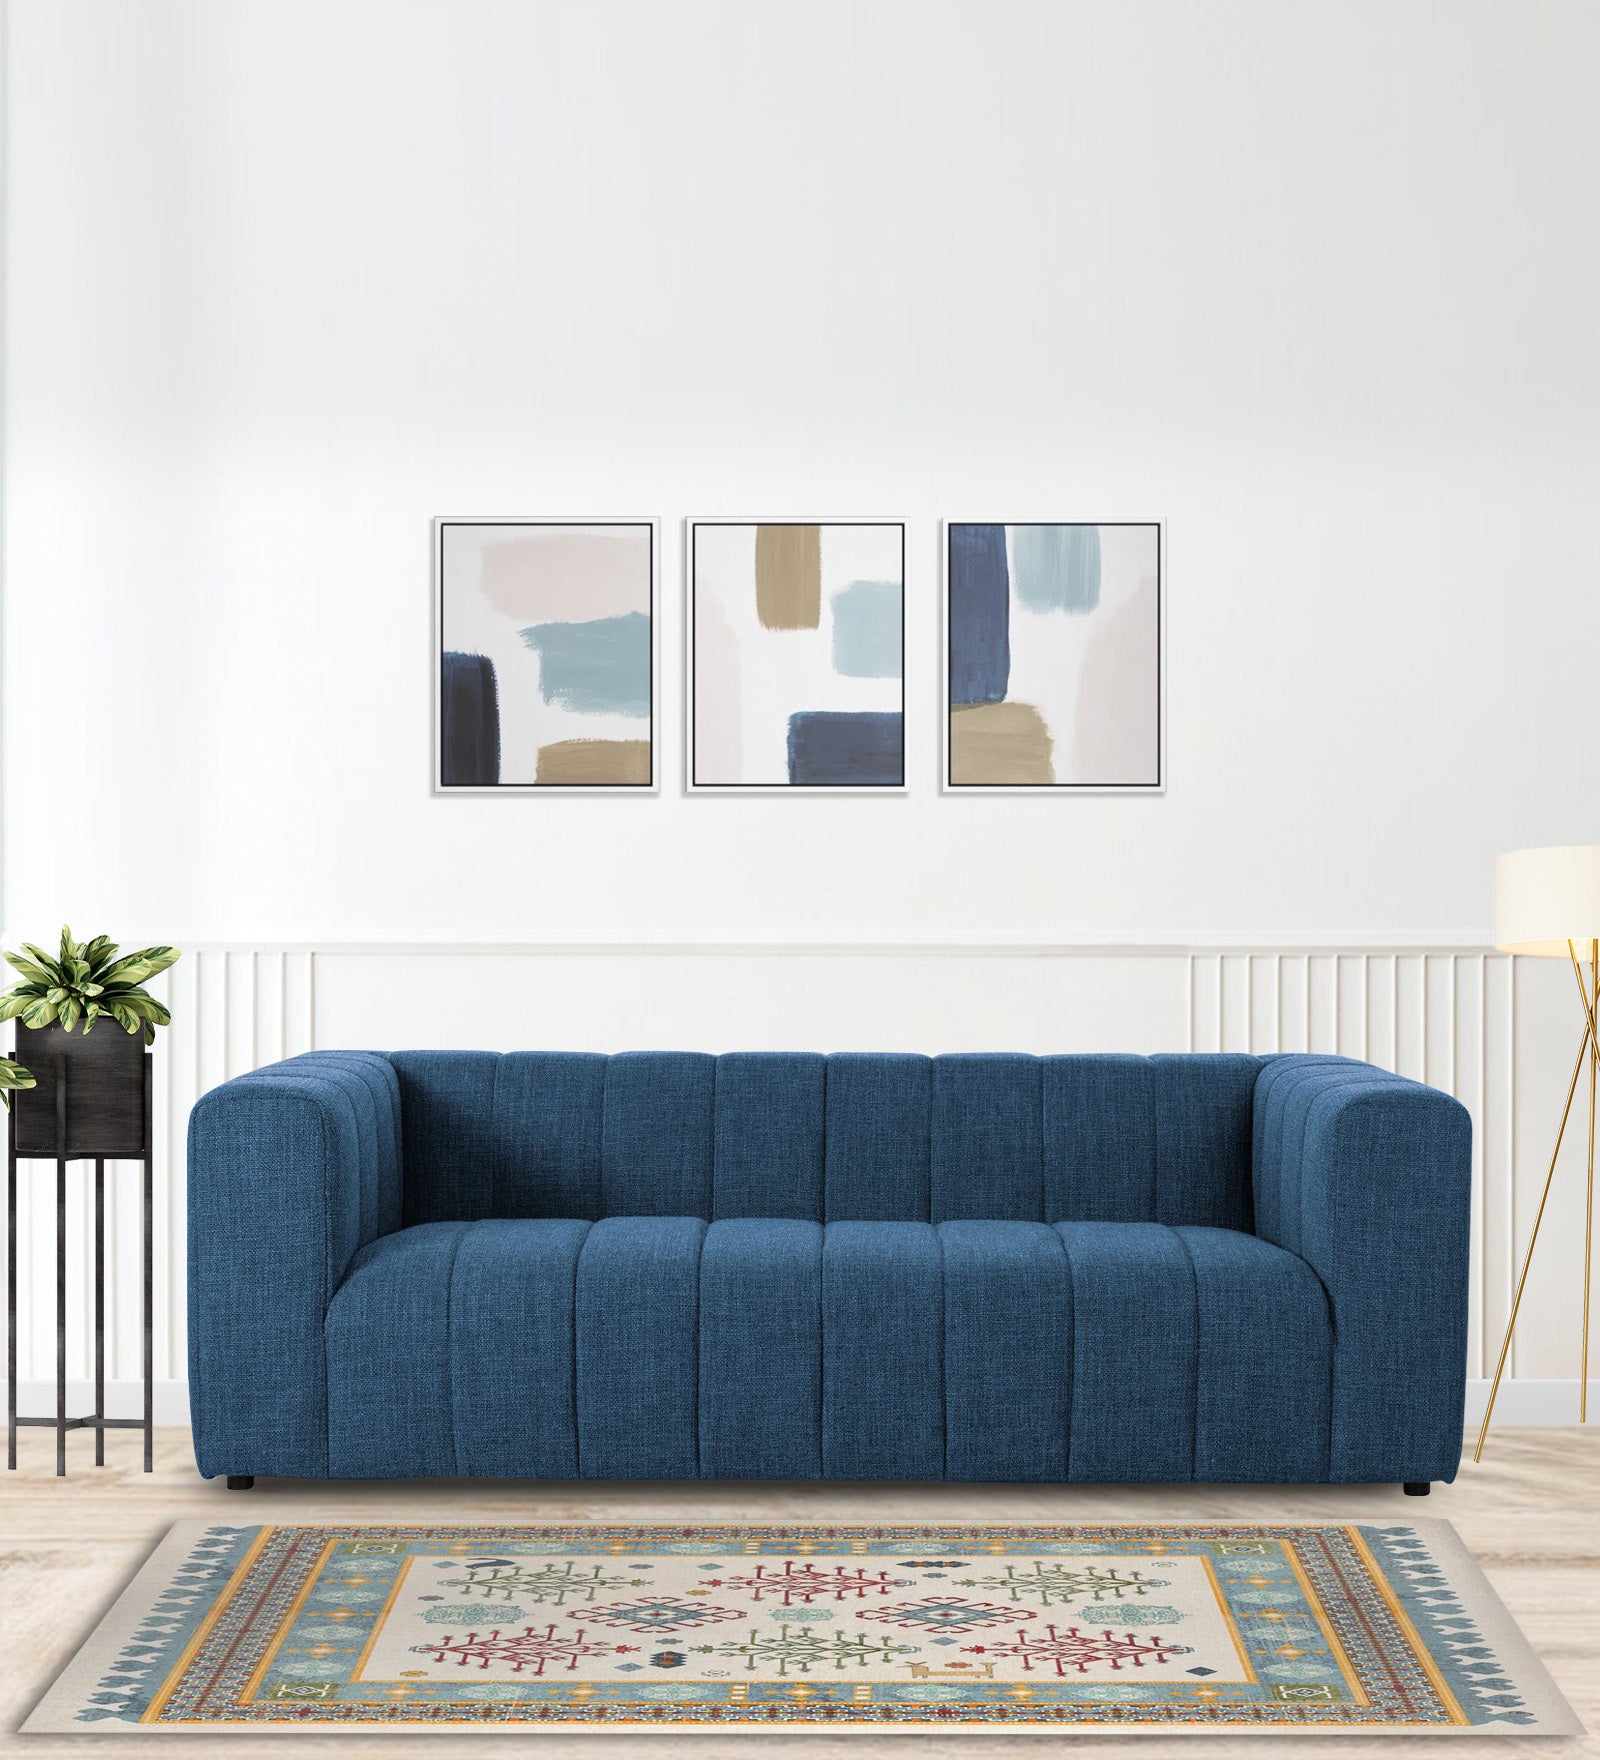 Lara Fabric 3 Seater Sofa in Light Blue Colour